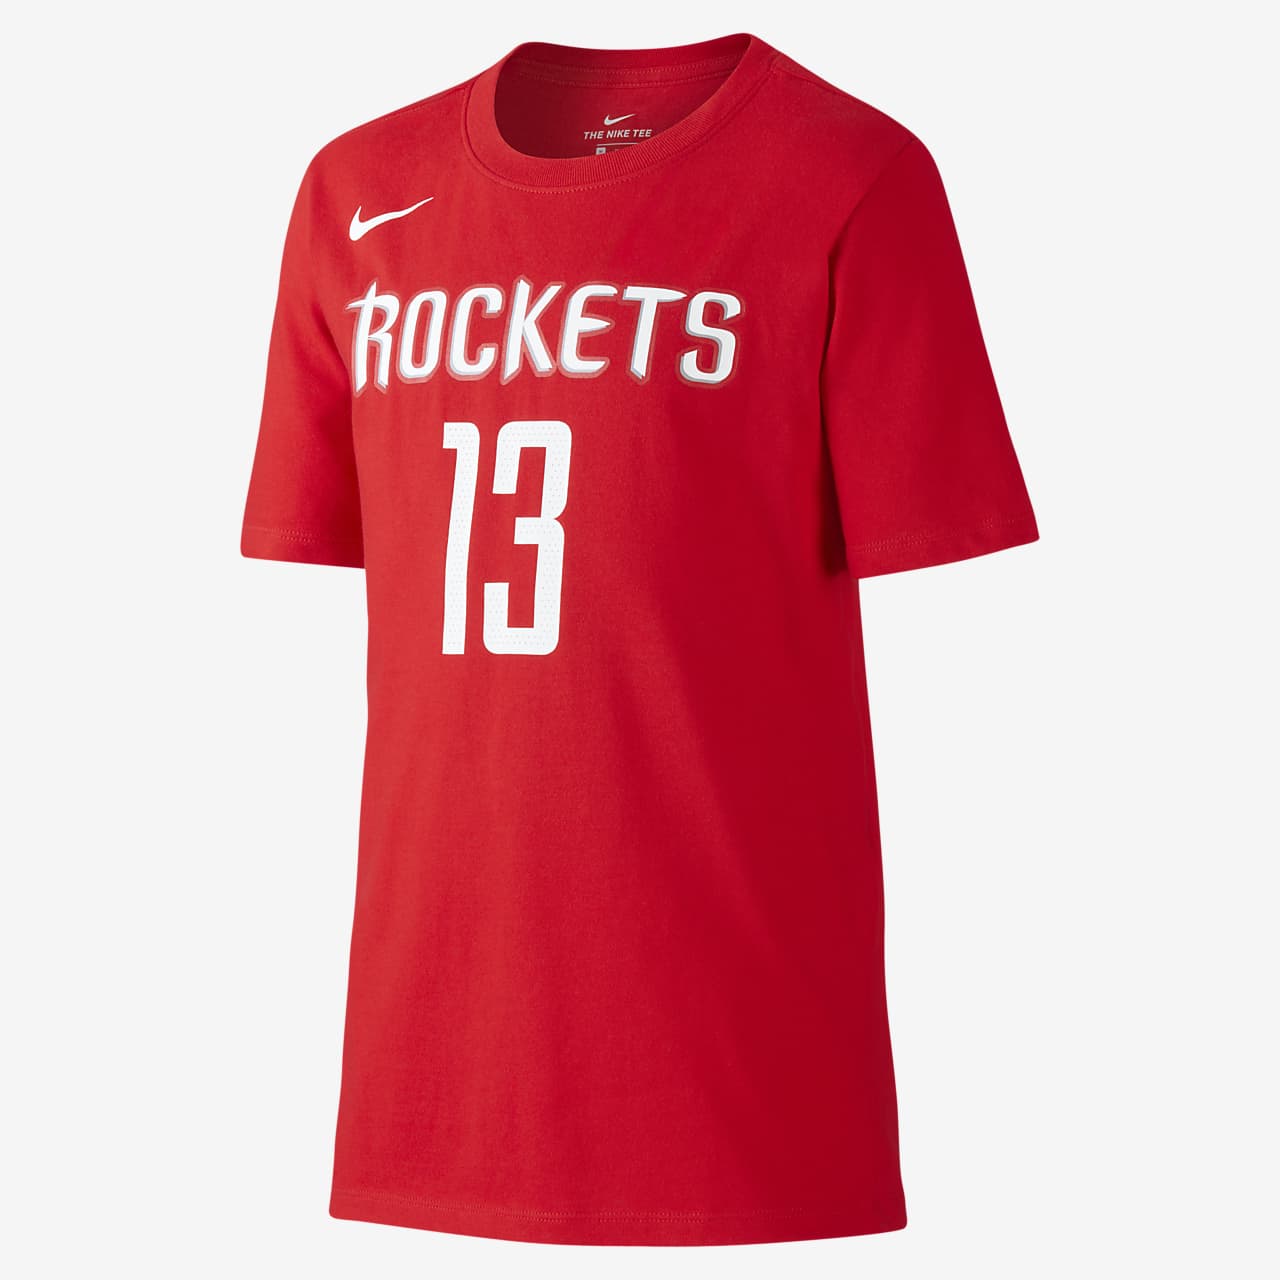 Nike Icon NBA Rockets (Harden) Older 